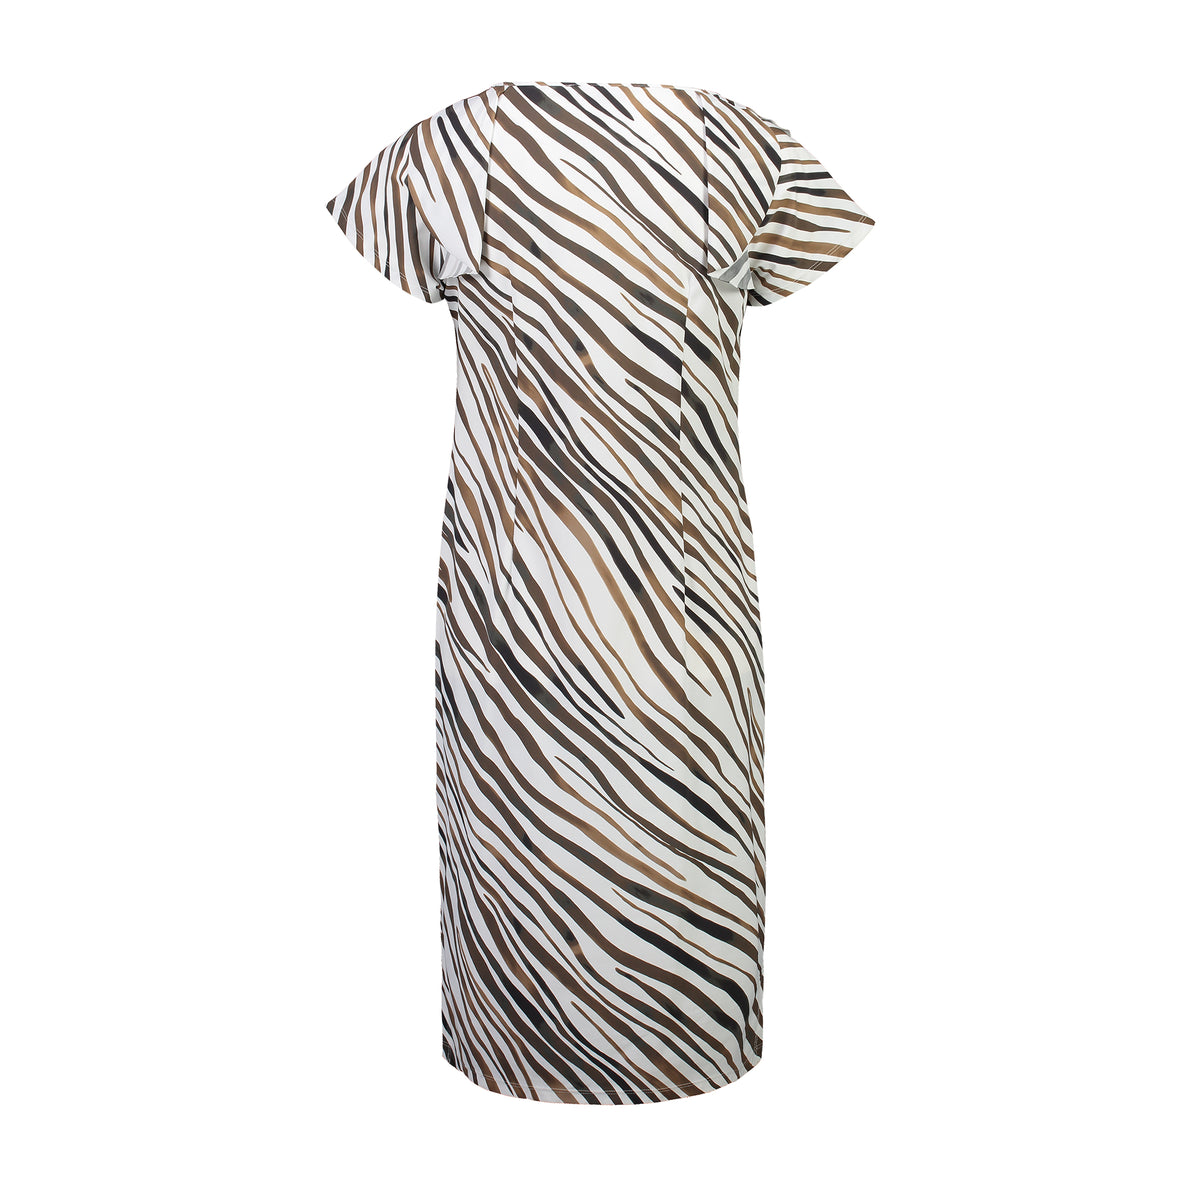 Paula Ryan Soft Cap Dress - Zebra